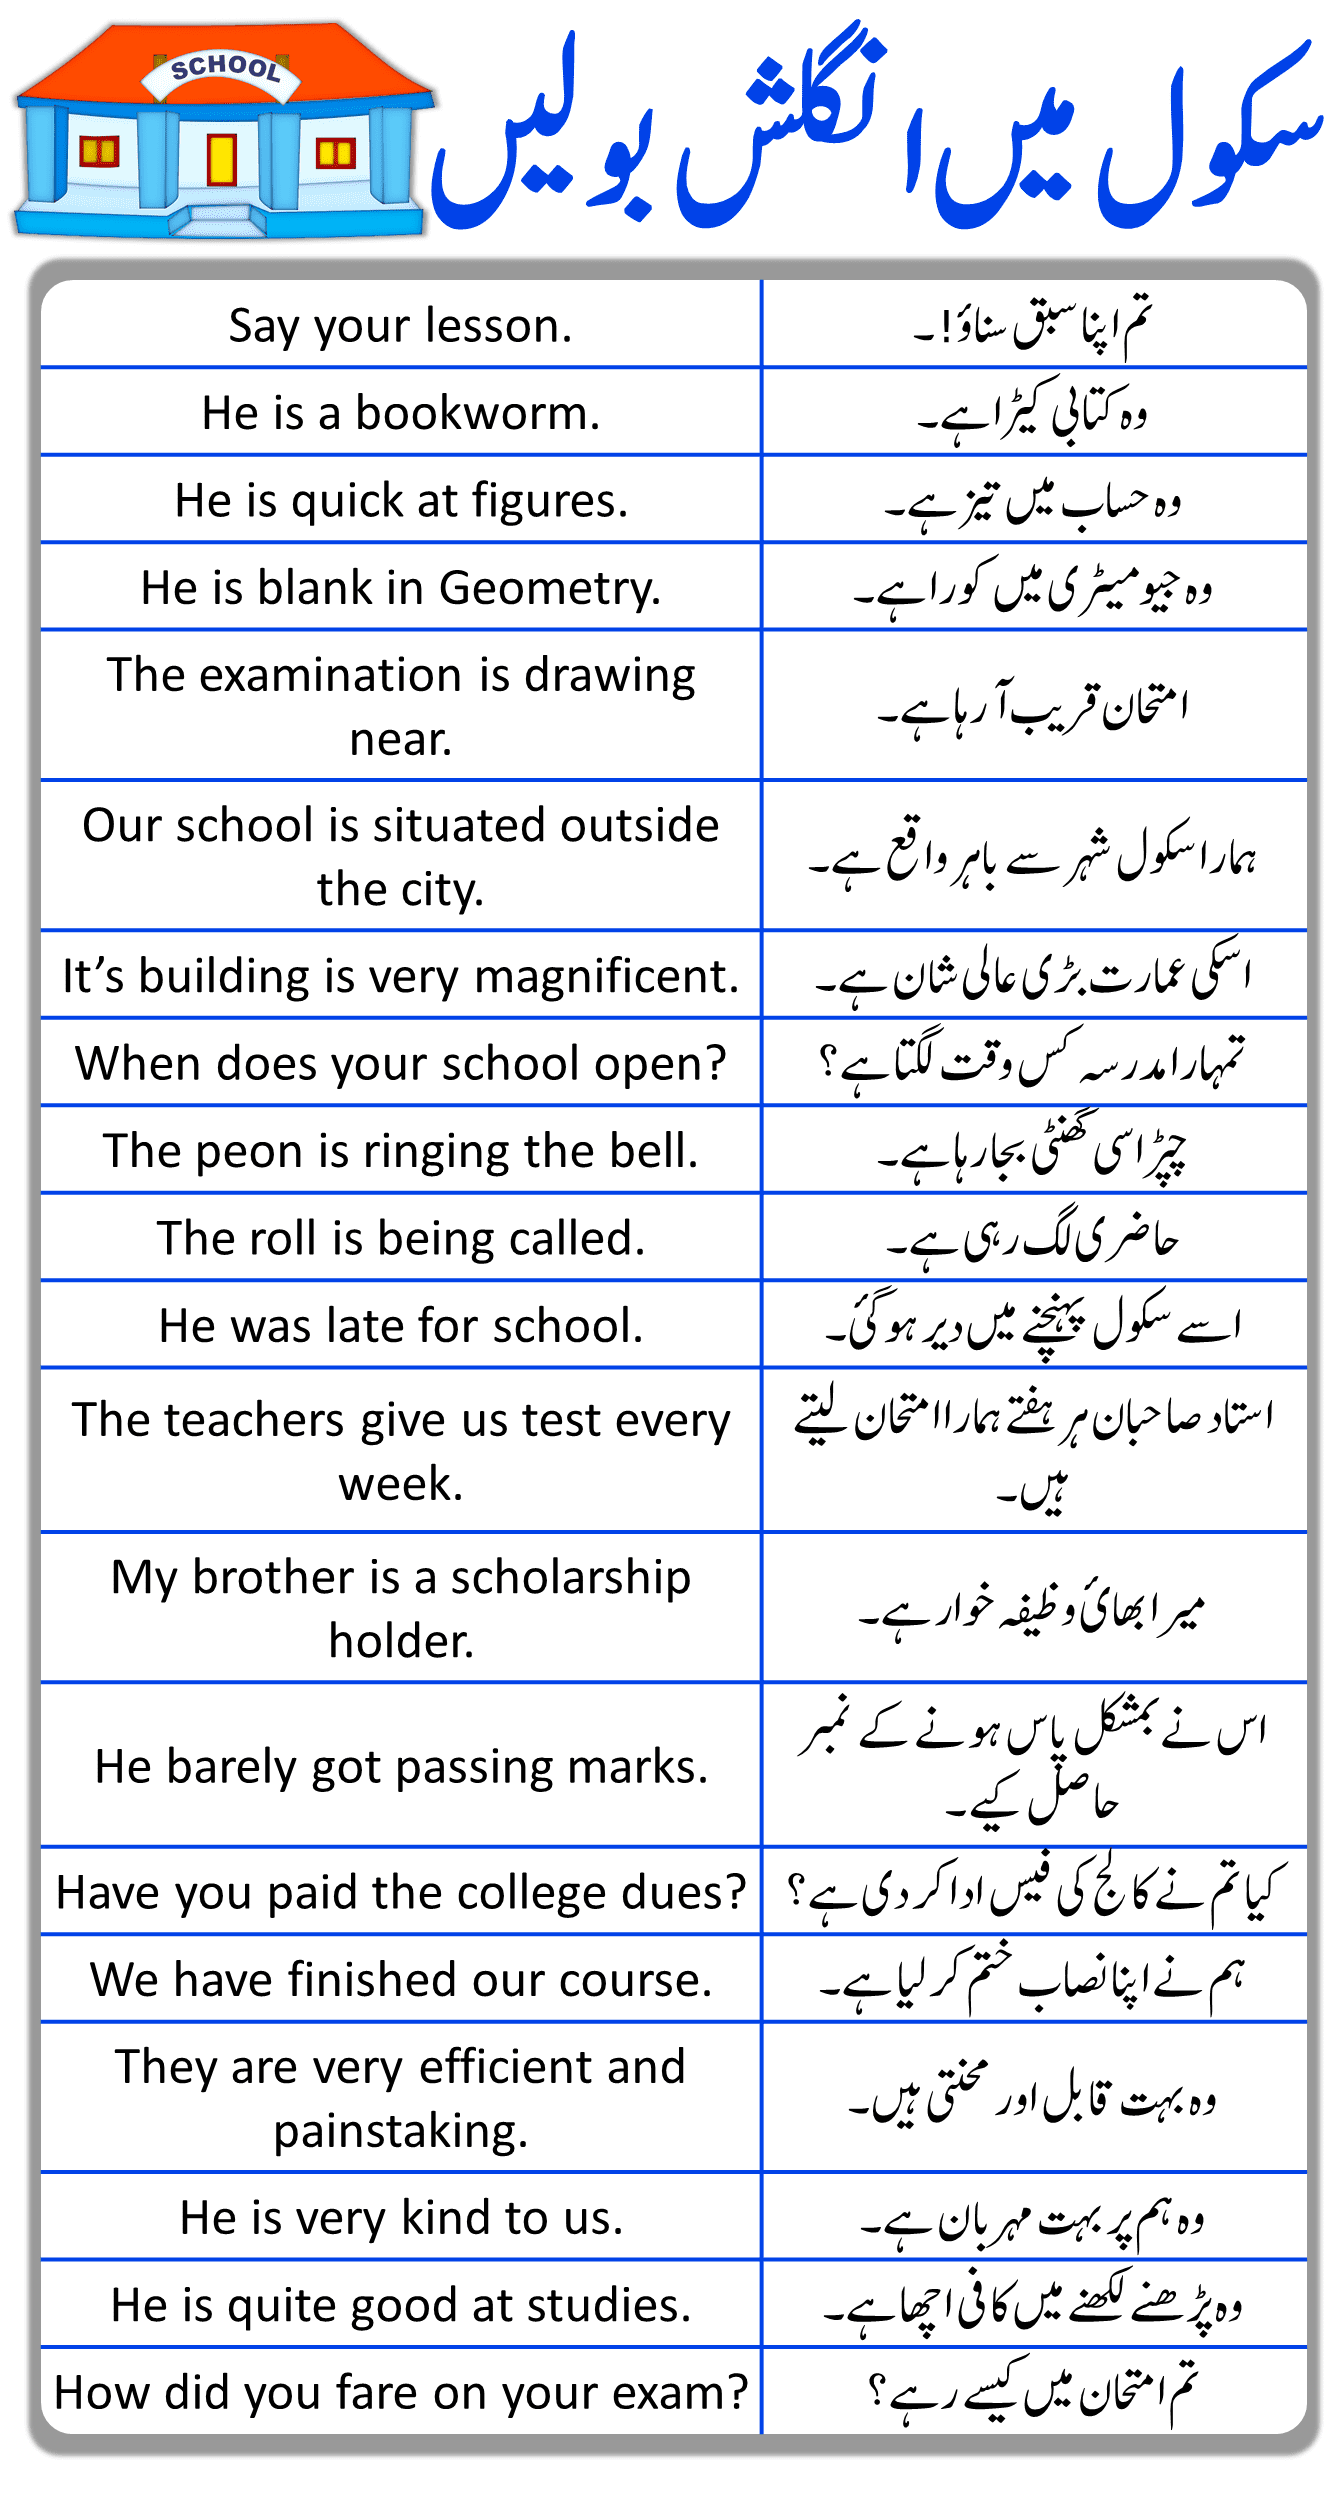 School English Conversation Sentences